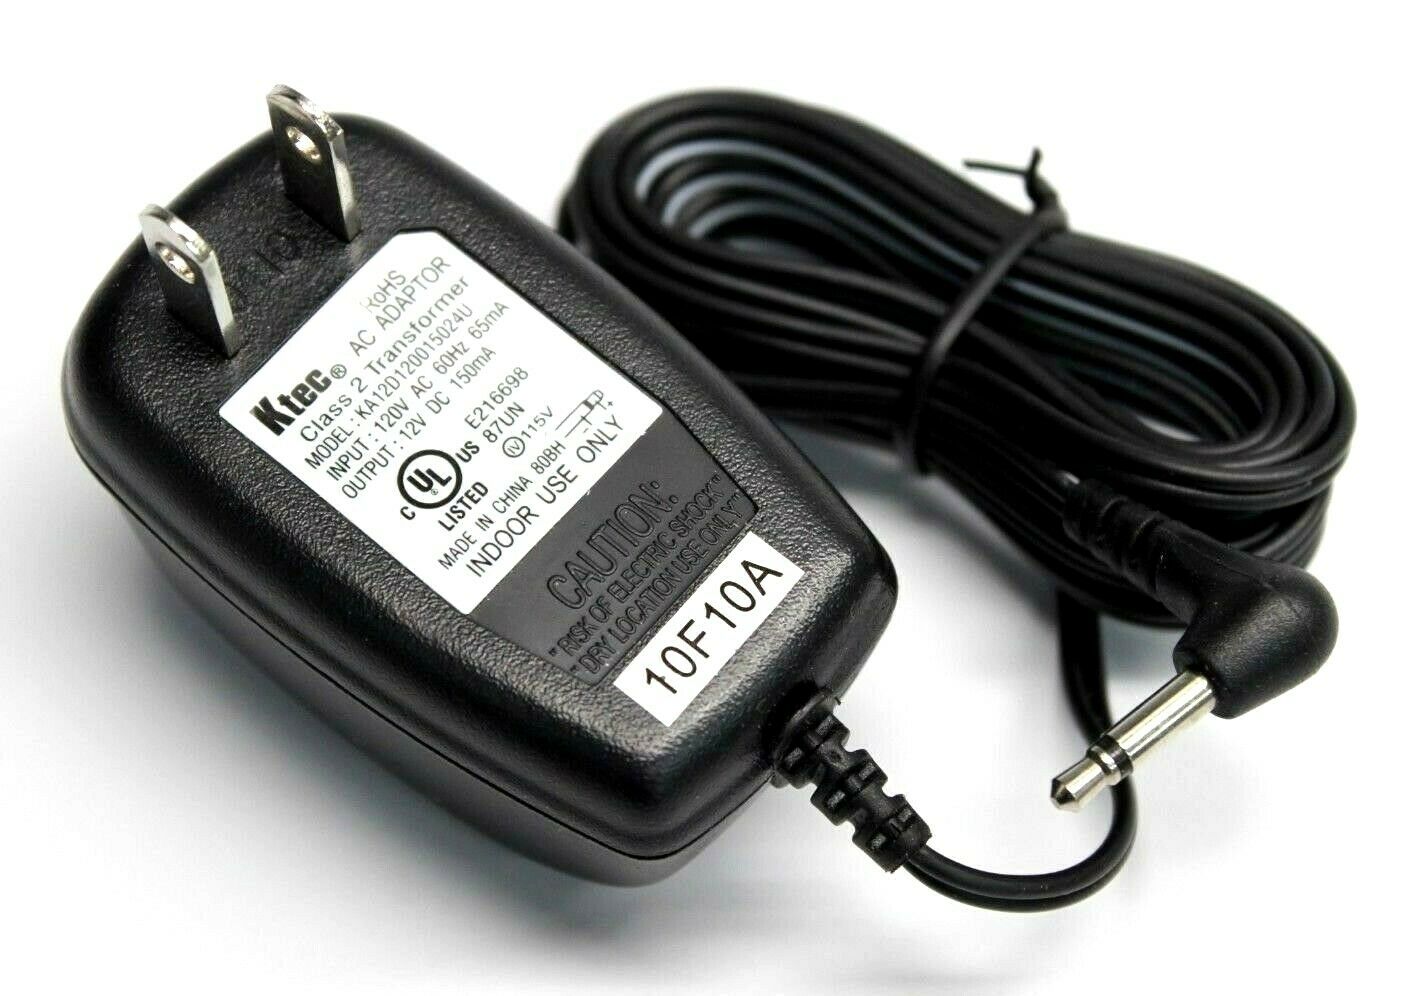 KA12D120015024U 12V DC 150mA 12 Volt AC Power Charger Adapter with 3.5mm Plug Brand: Ktec Power Supply Co Type: Plug